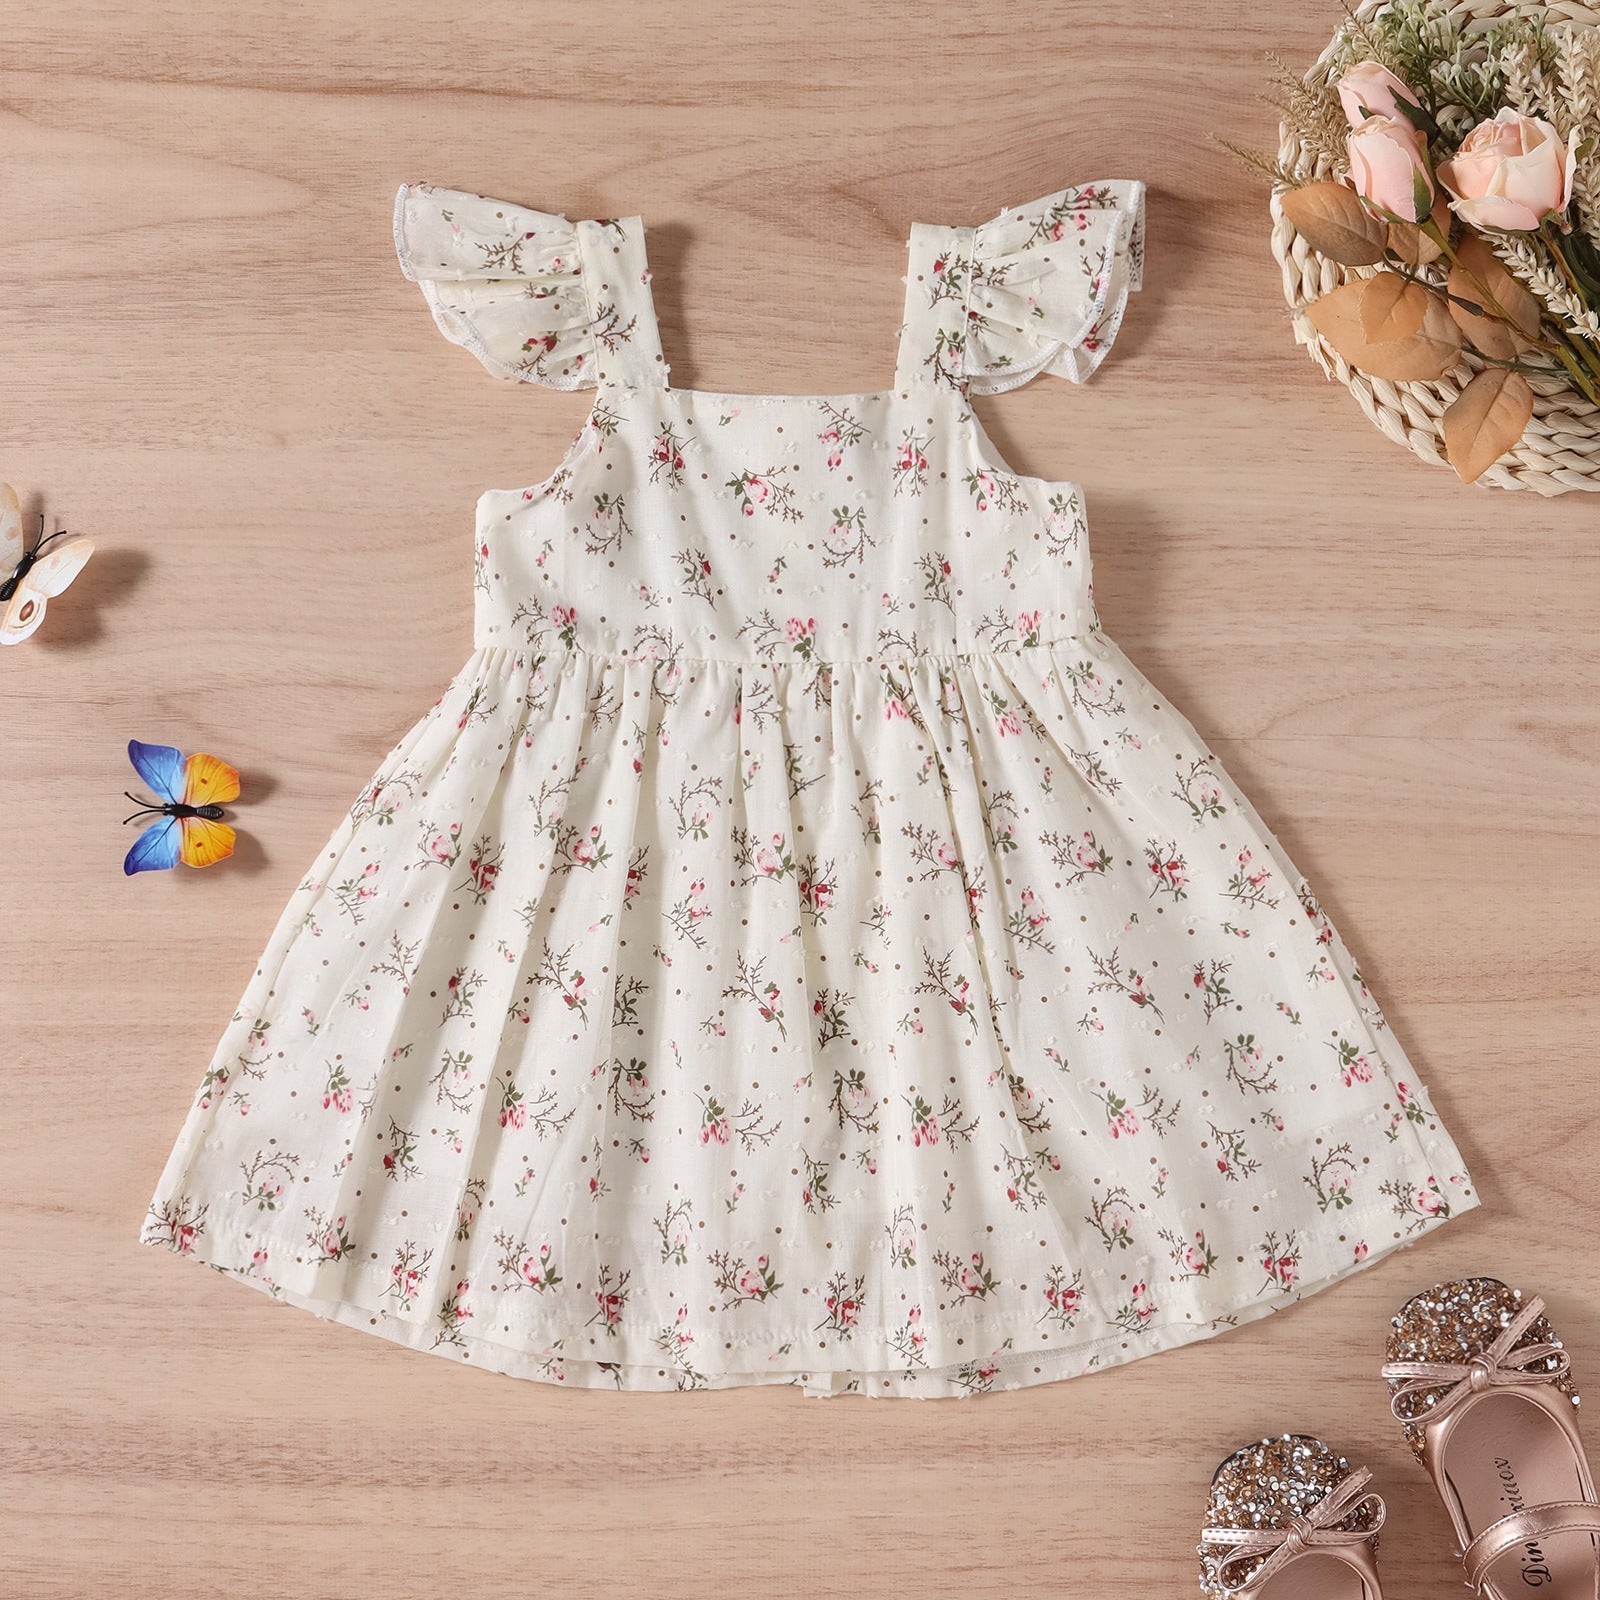 Floral Print Butterfly Sleeve Dress | Boho floral maxi dress, Butterfly  sleeve dress, Boho maxi dress